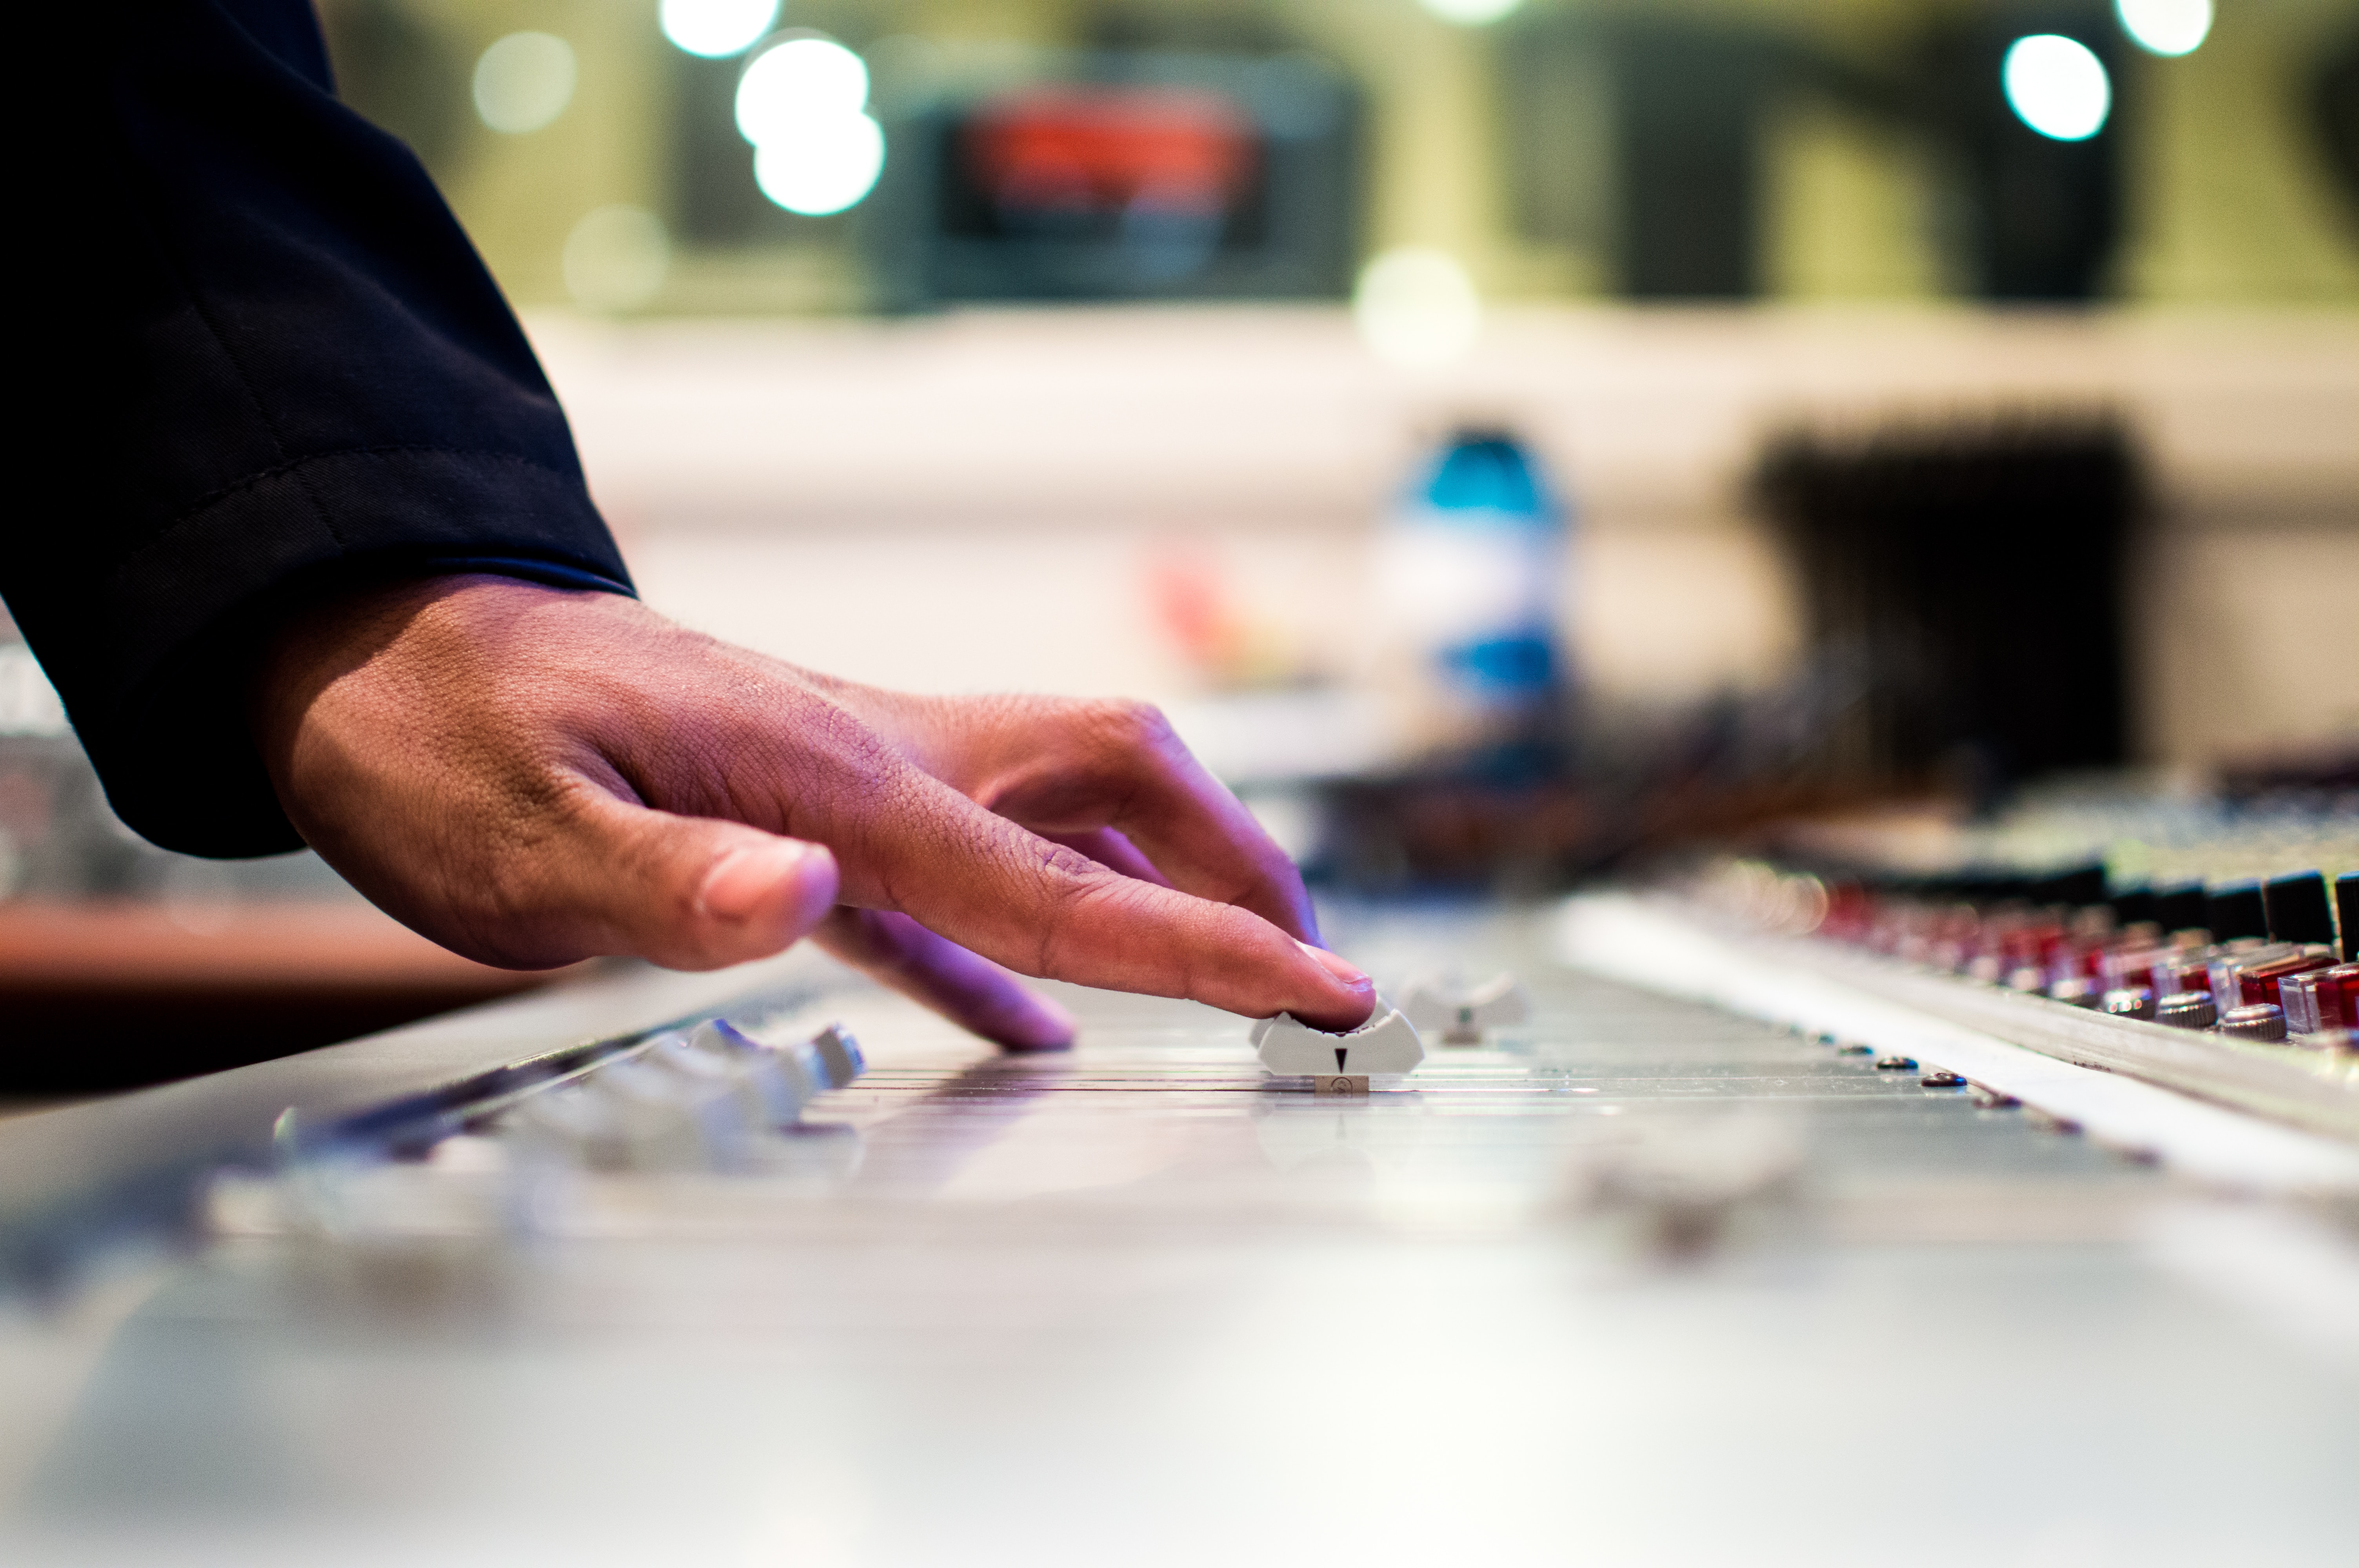 A hand adjusting dials on a mixer in a studio.